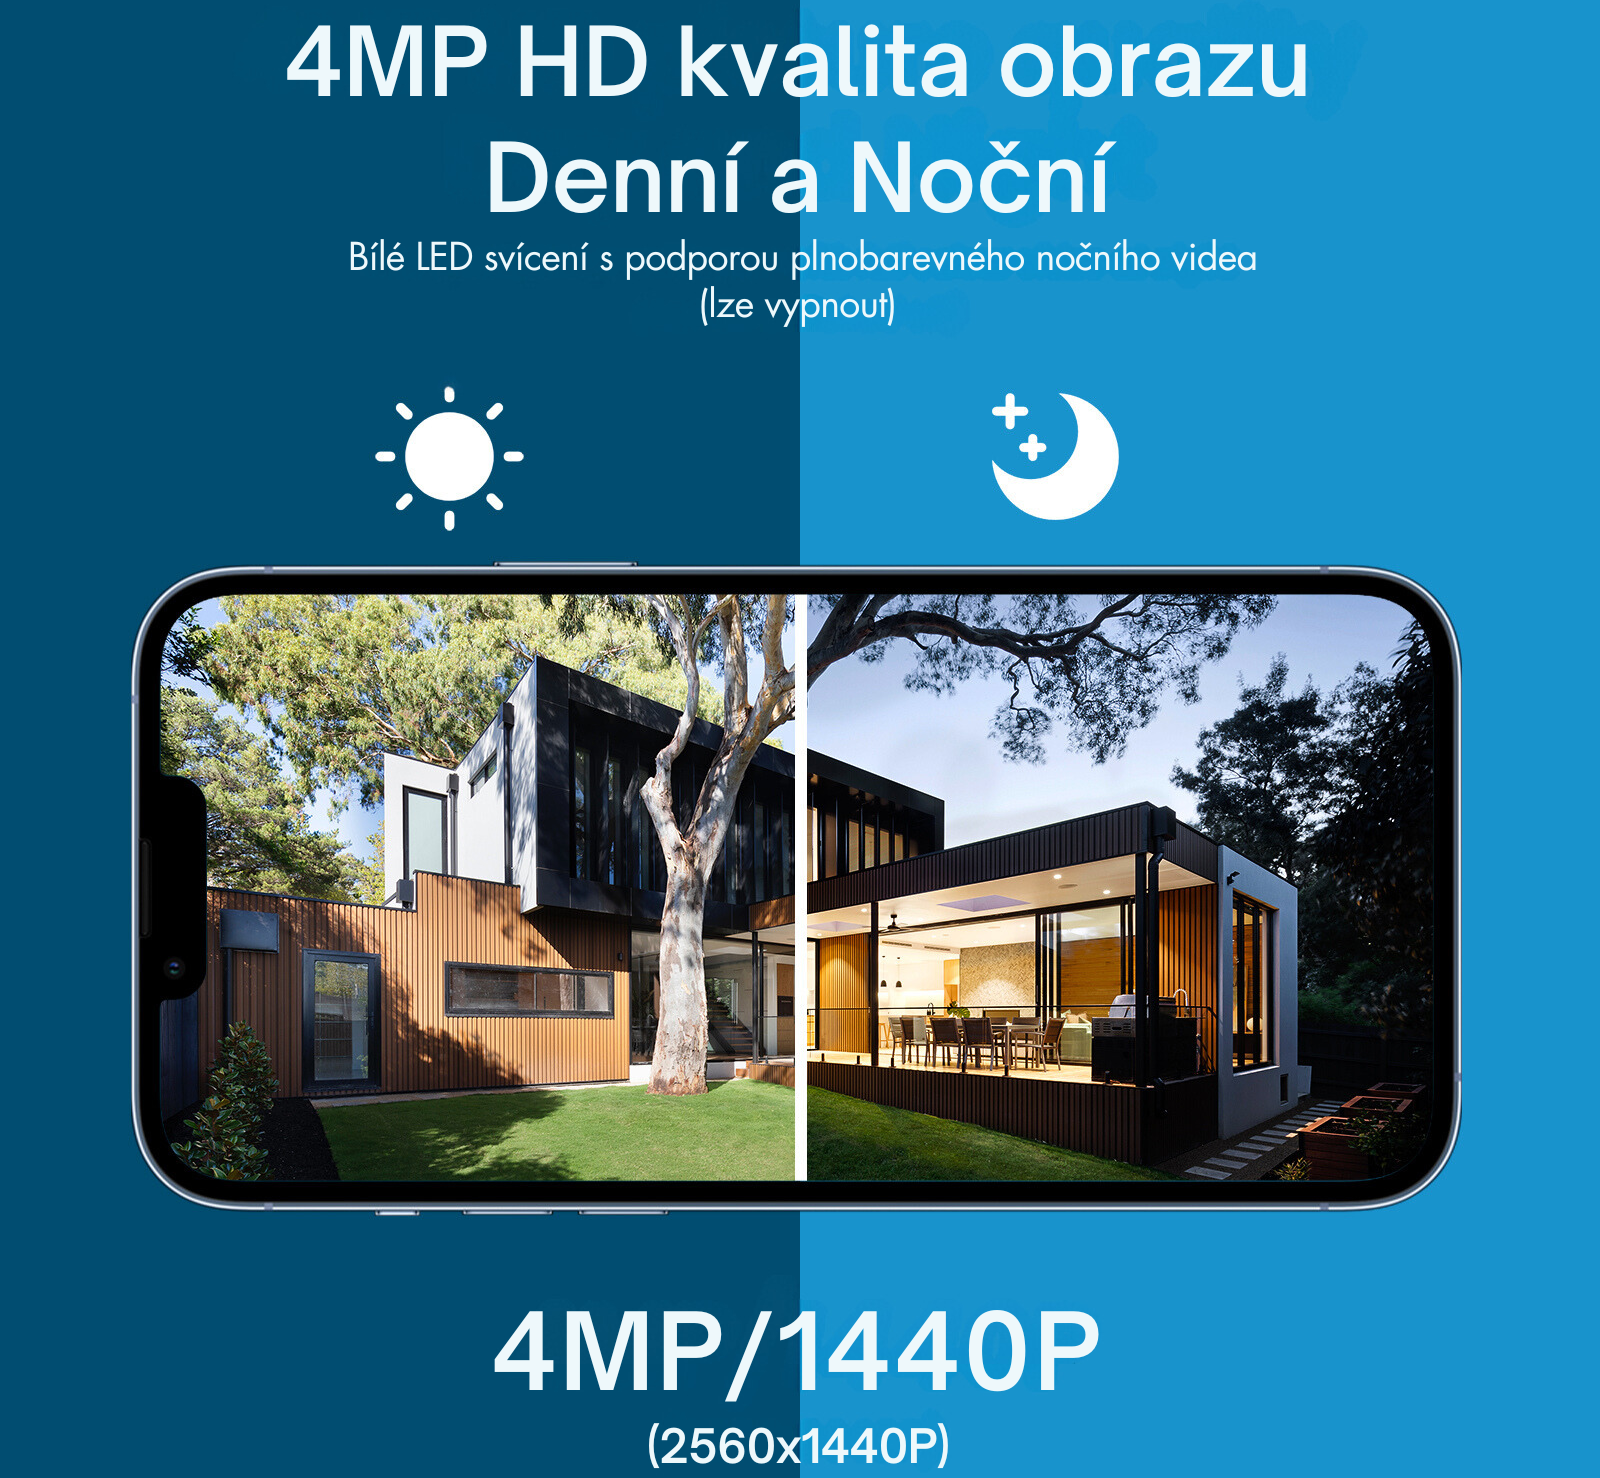 4MP HD kvalita obrazu Denní a Noční four spotlights provide you with full colour video at night (can be switched off)